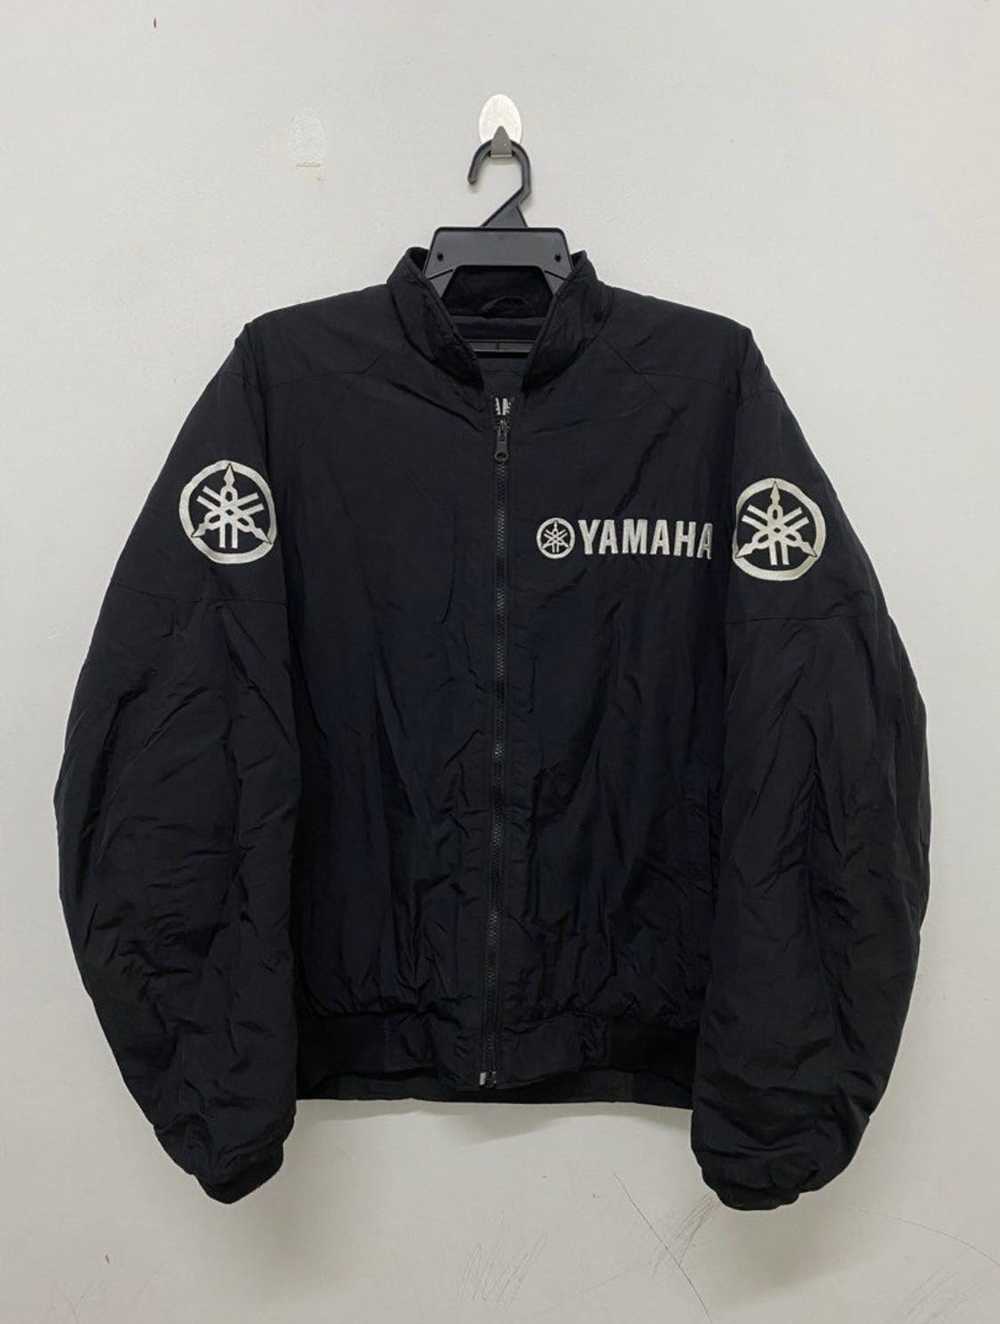 Racing × Sports Specialties × Yamaha YAMAHA jacket - image 1